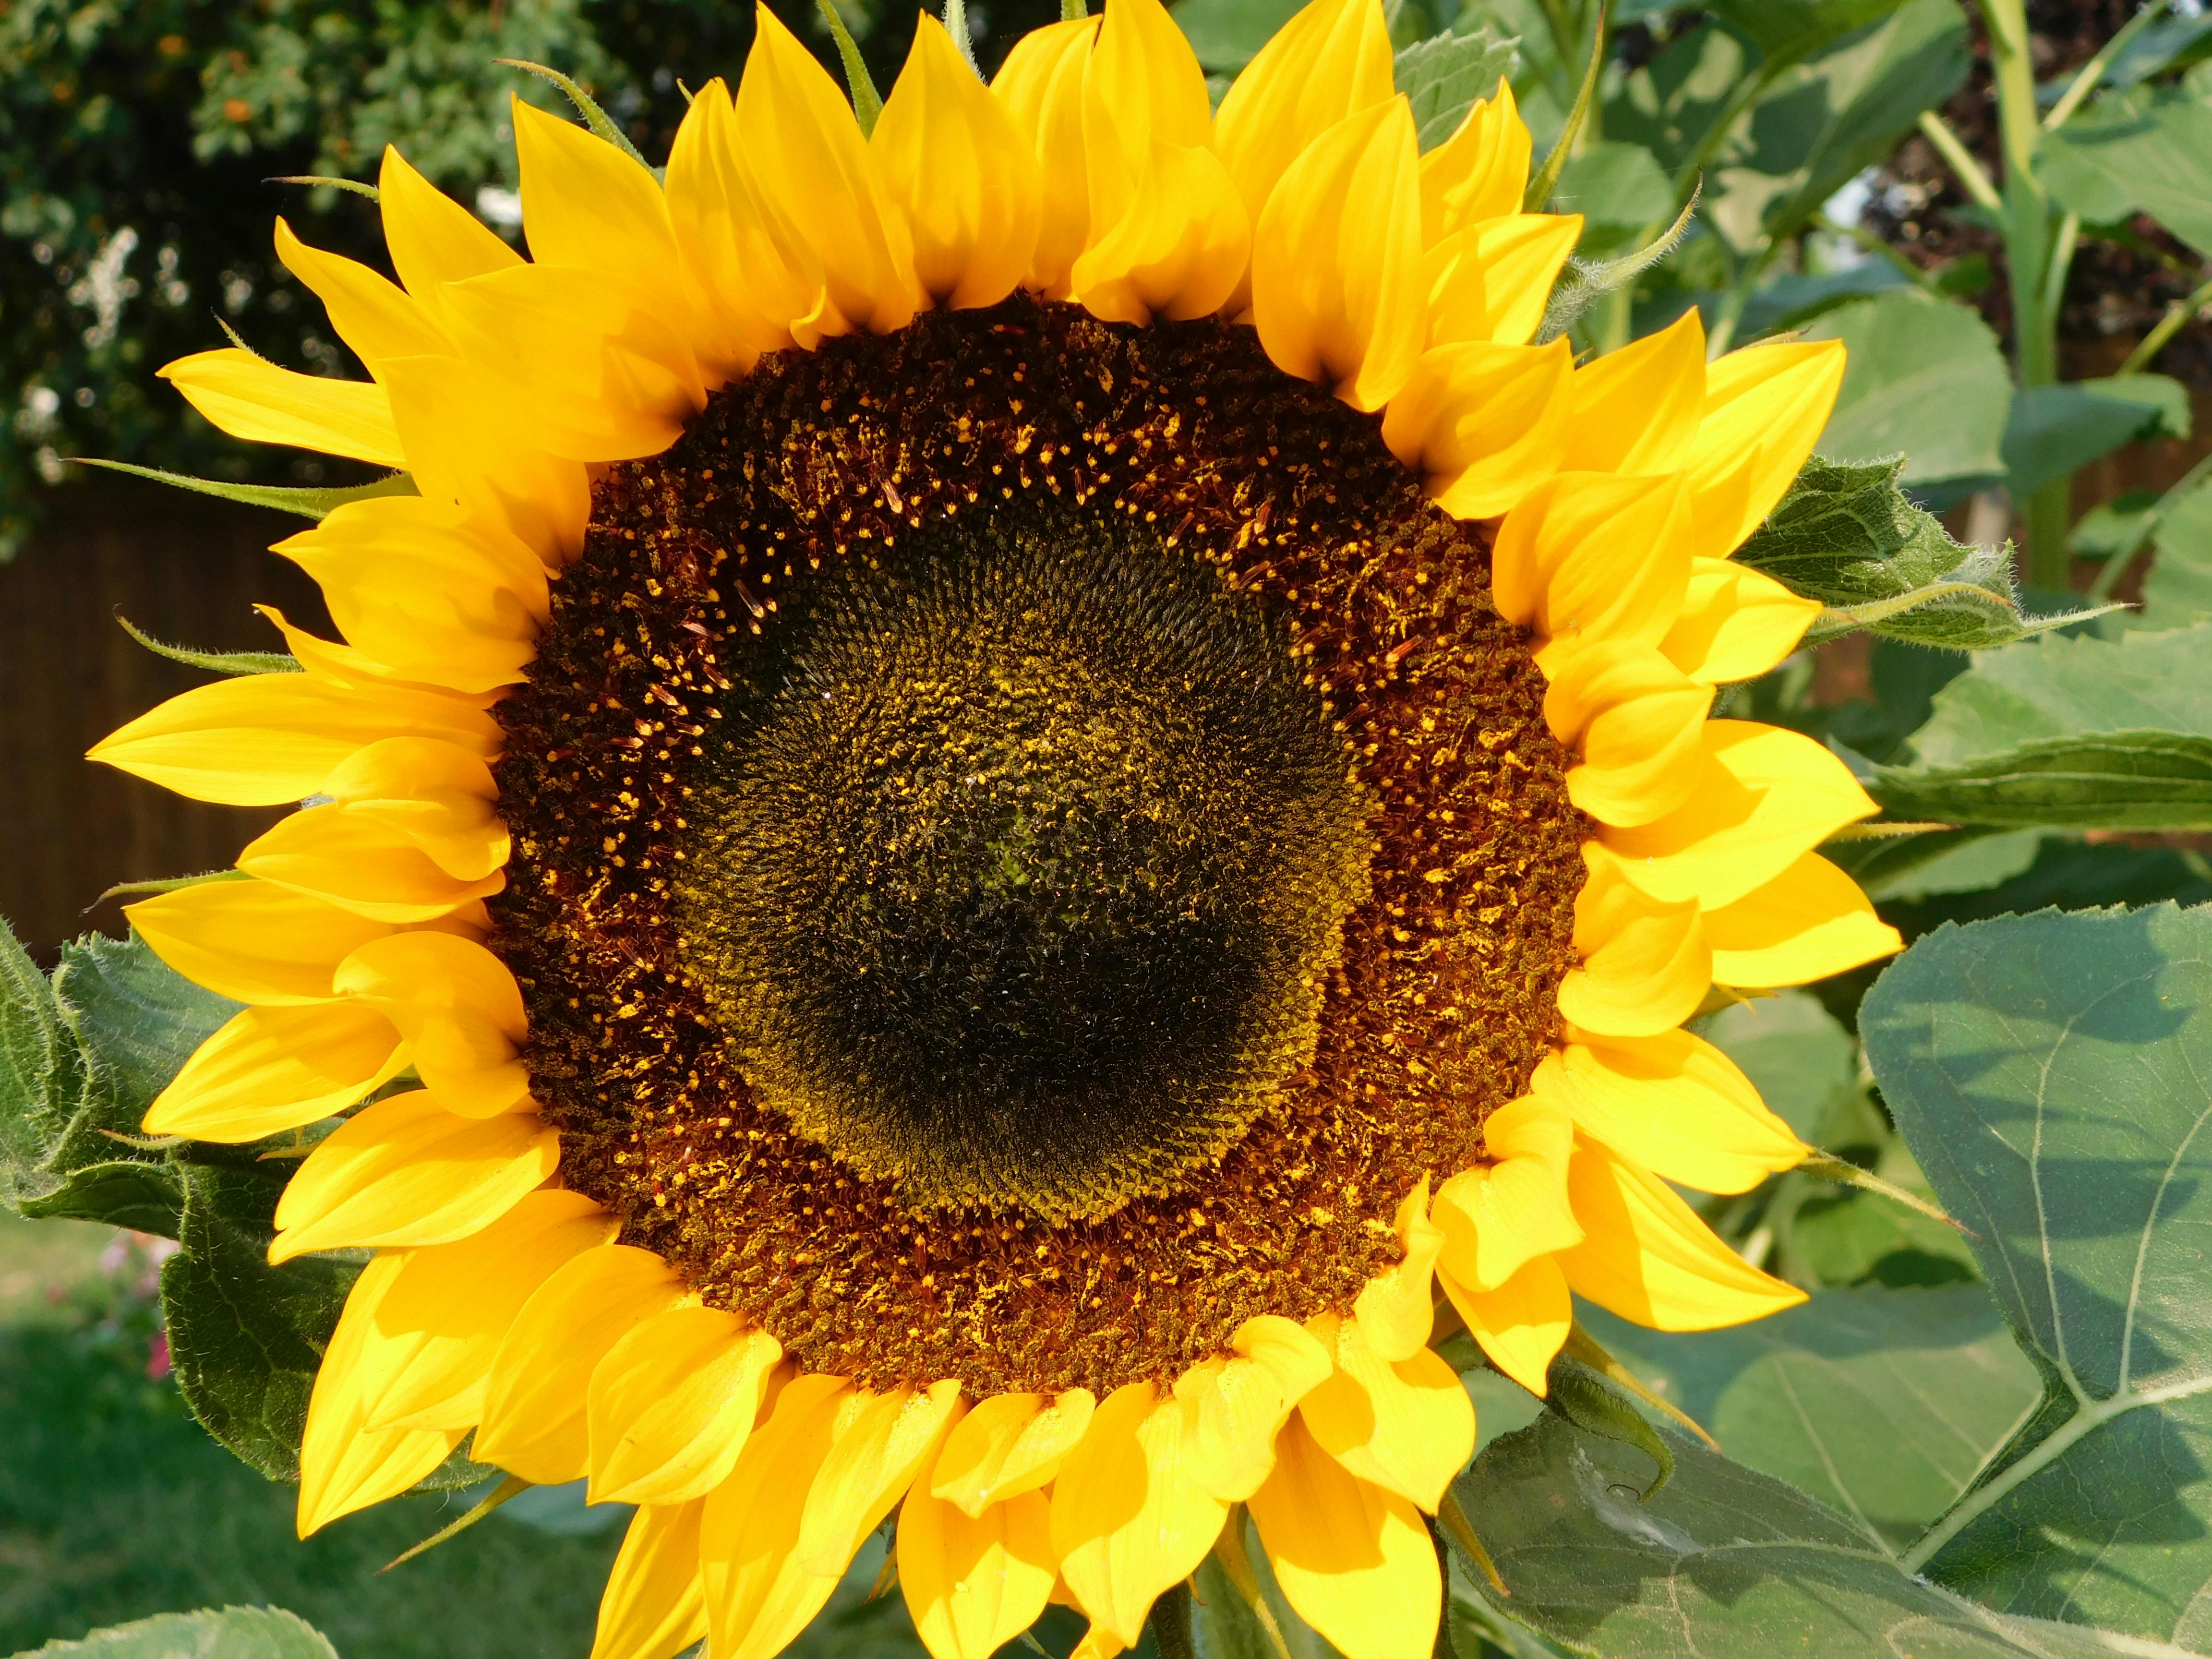 Free stock photo of Sunshine Flower In The Garden